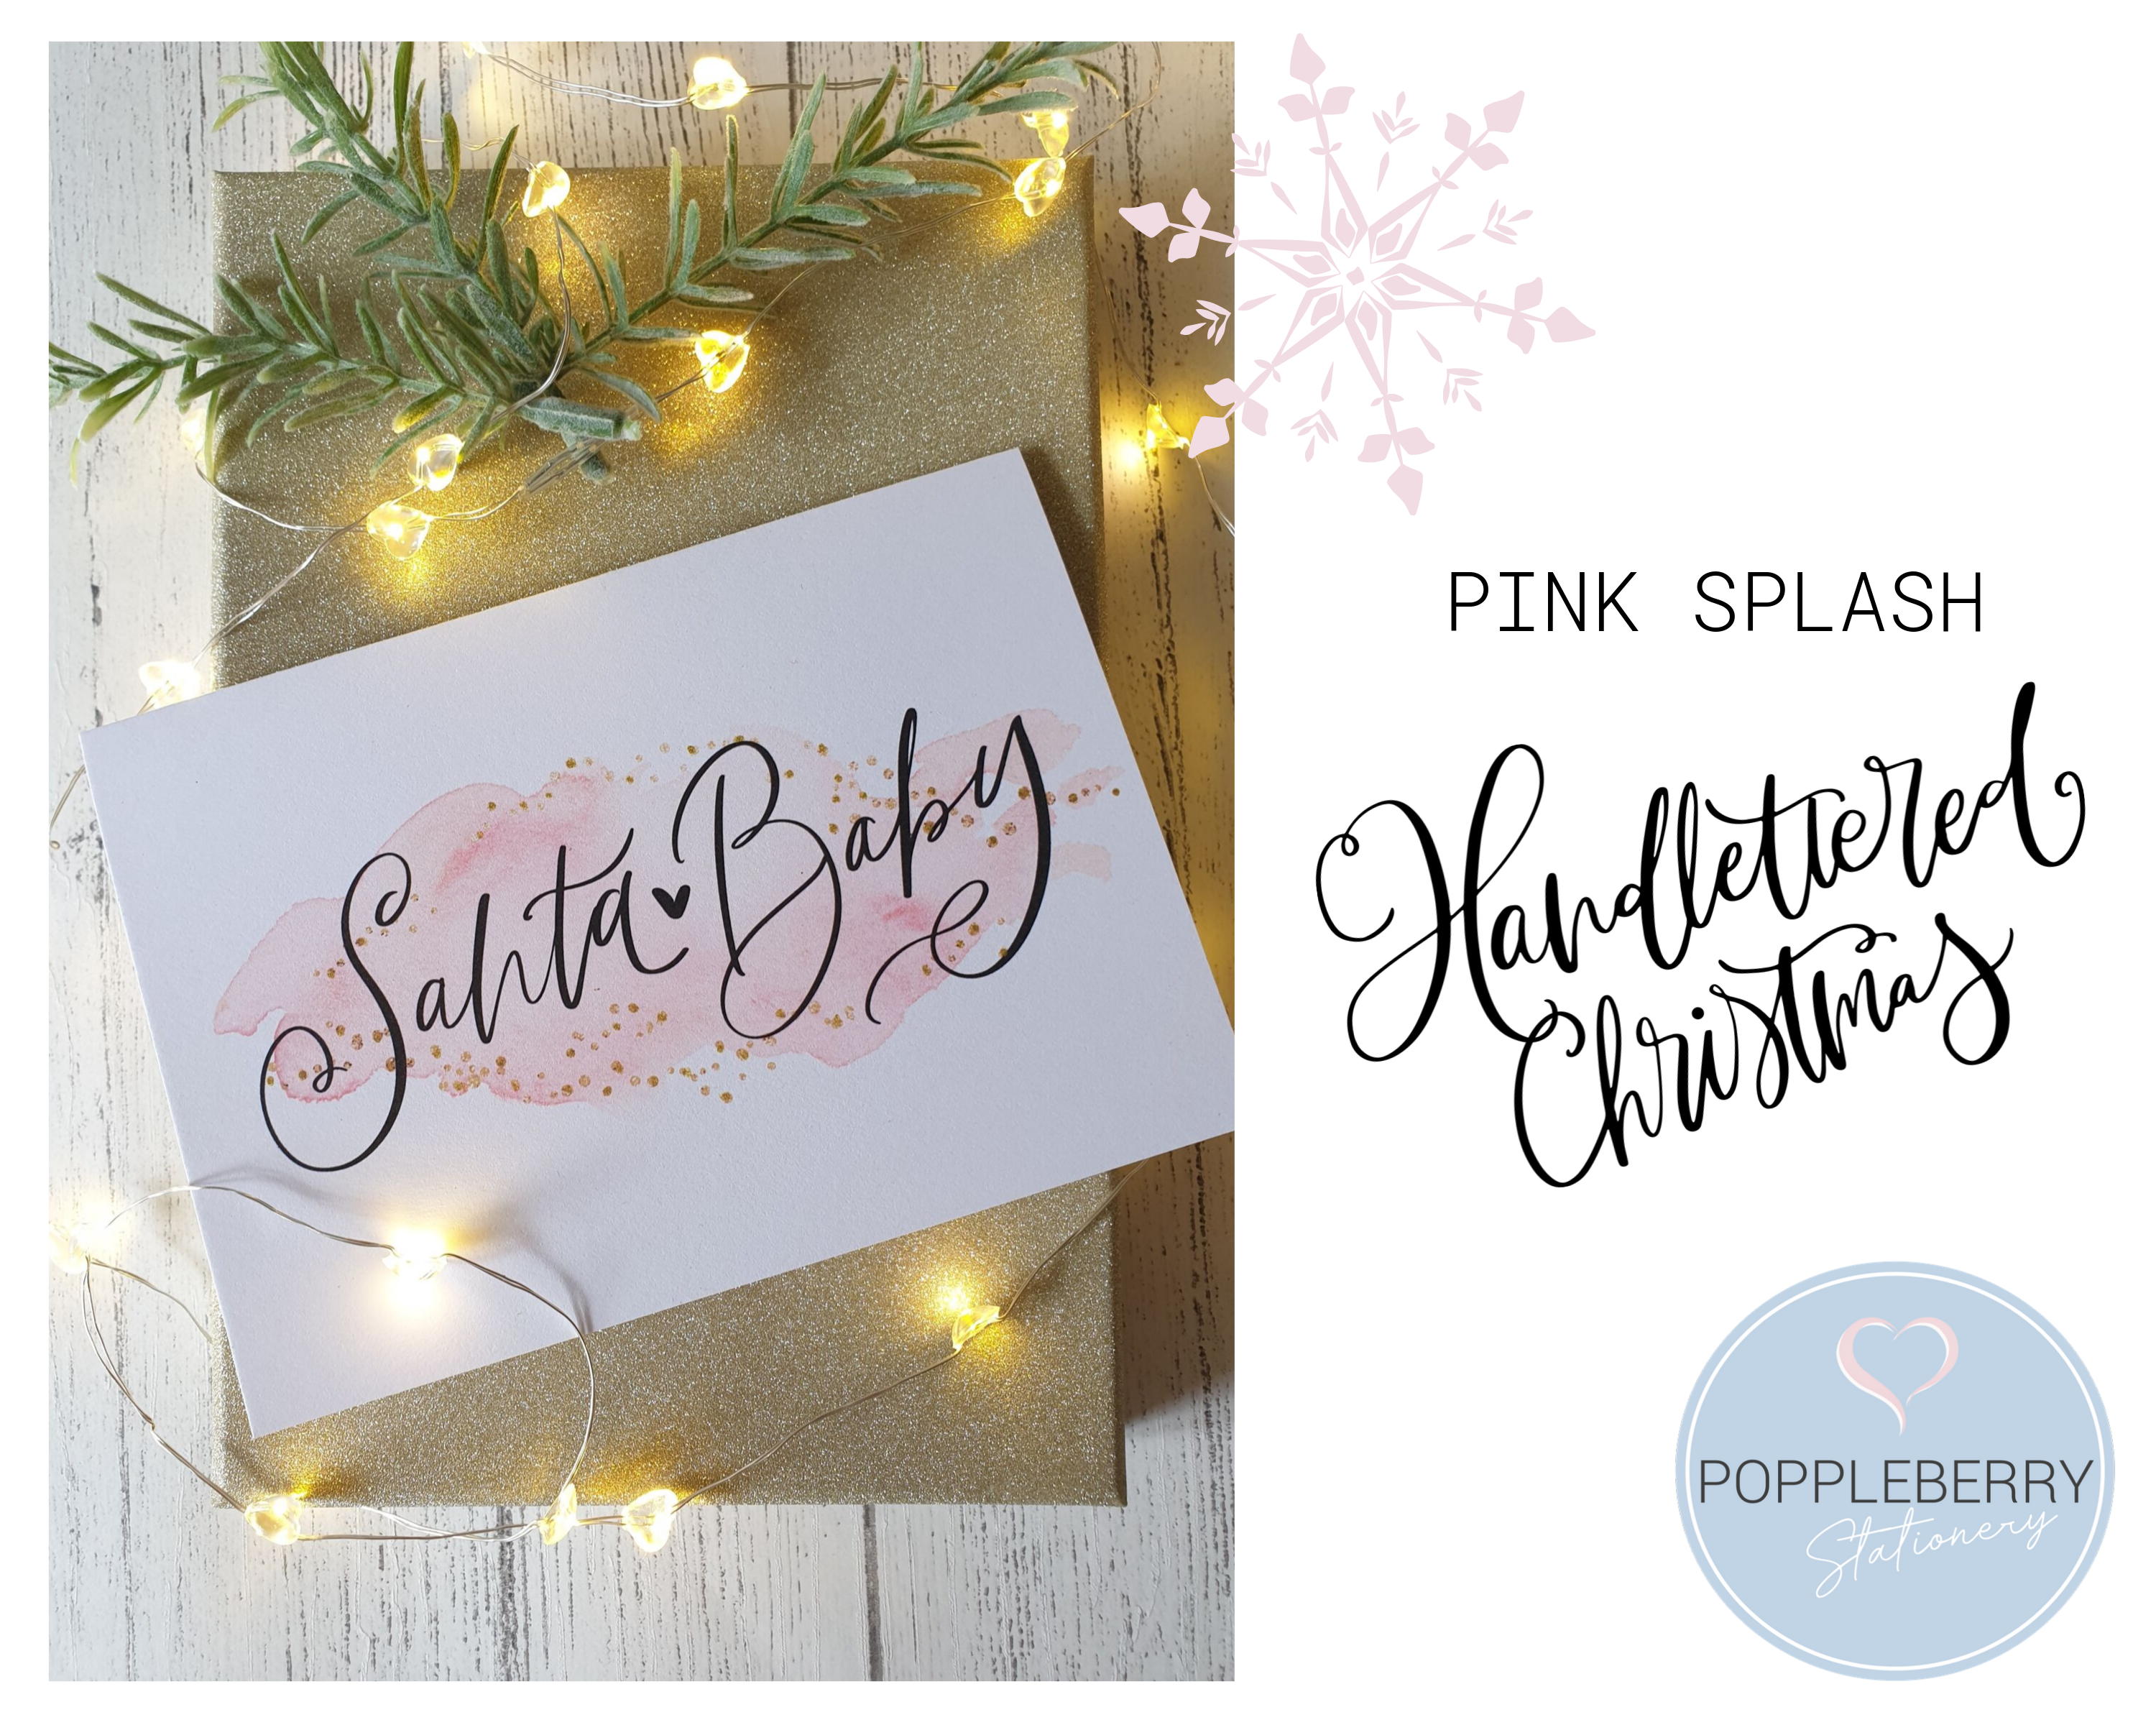 Poppleberry A6 'Santa Baby' Modern Pink Watercolour Splash Christmas Card with Gold Sparkle Glitter.